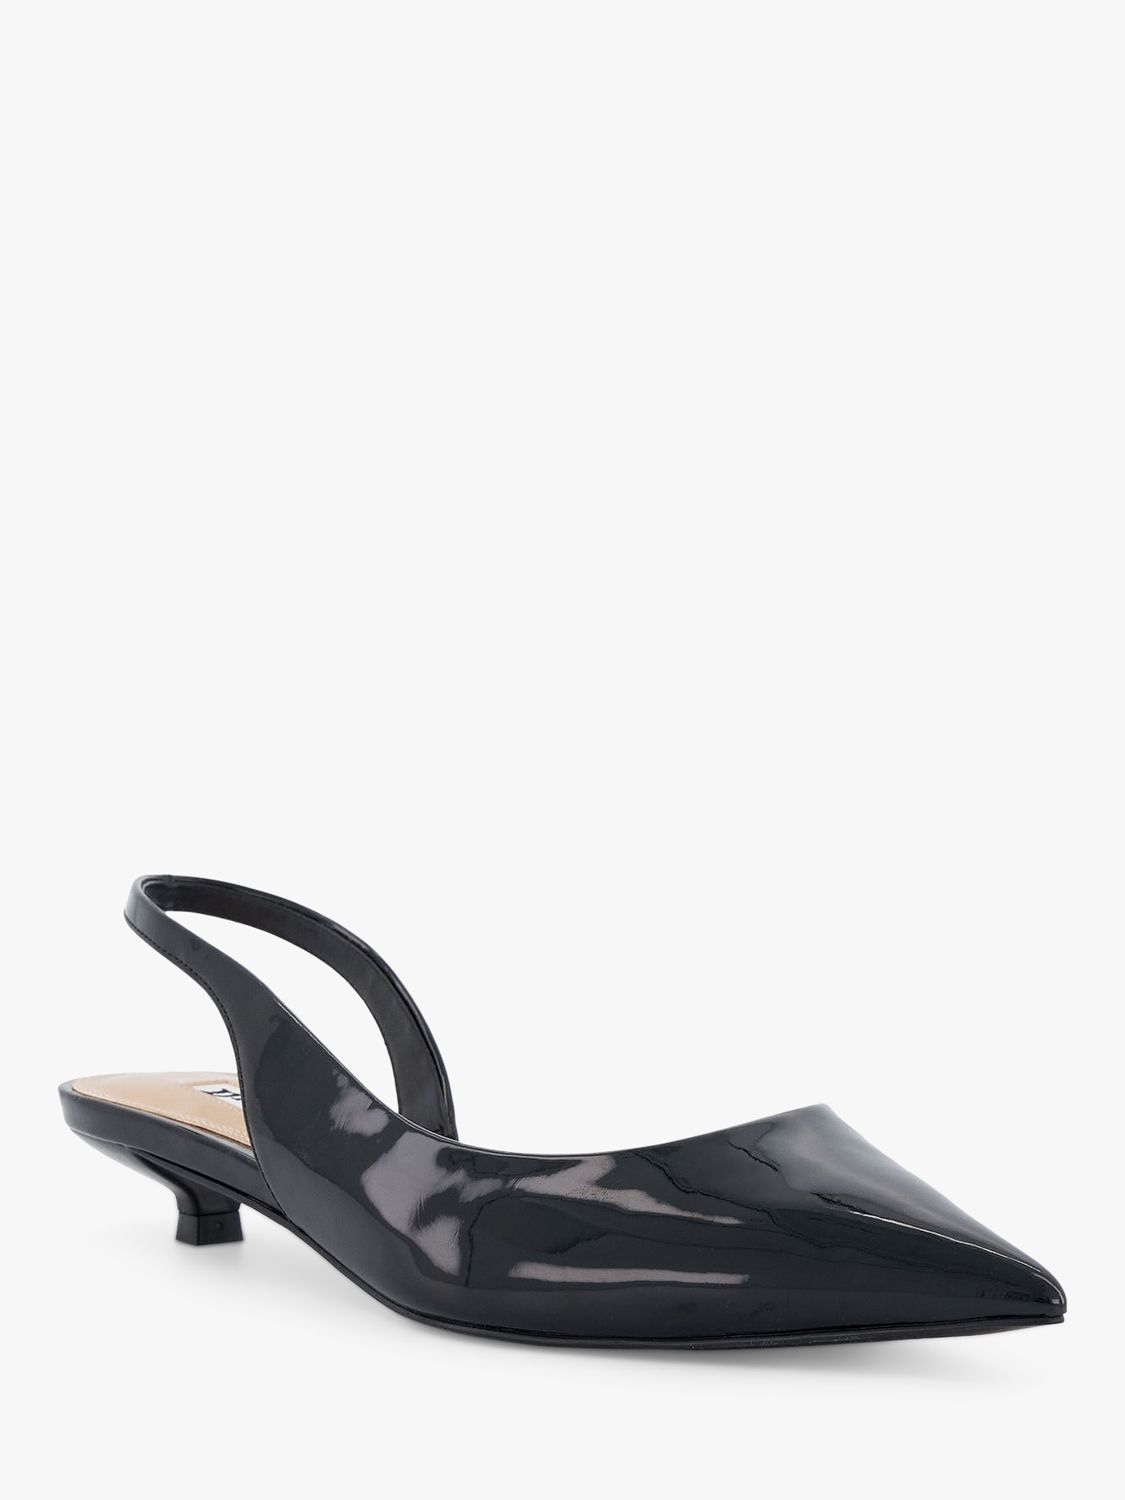 Dune Calmer Kitten Heel Slingback Shoes, Black at John Lewis & Partners